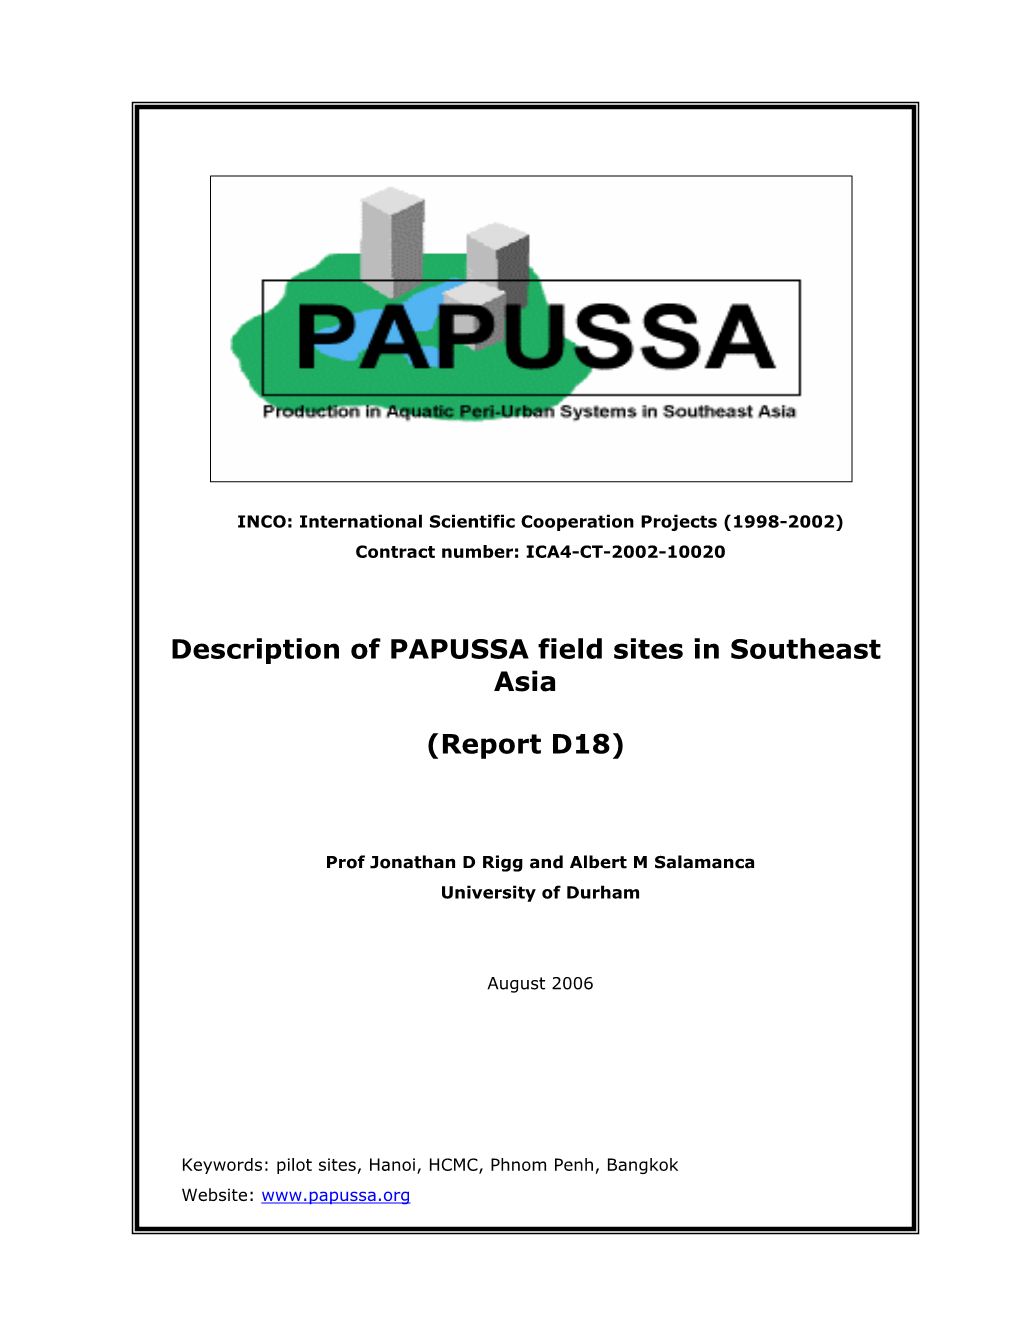 Description of PAPUSSA Field Sites in Southeast Asia (Report D18)